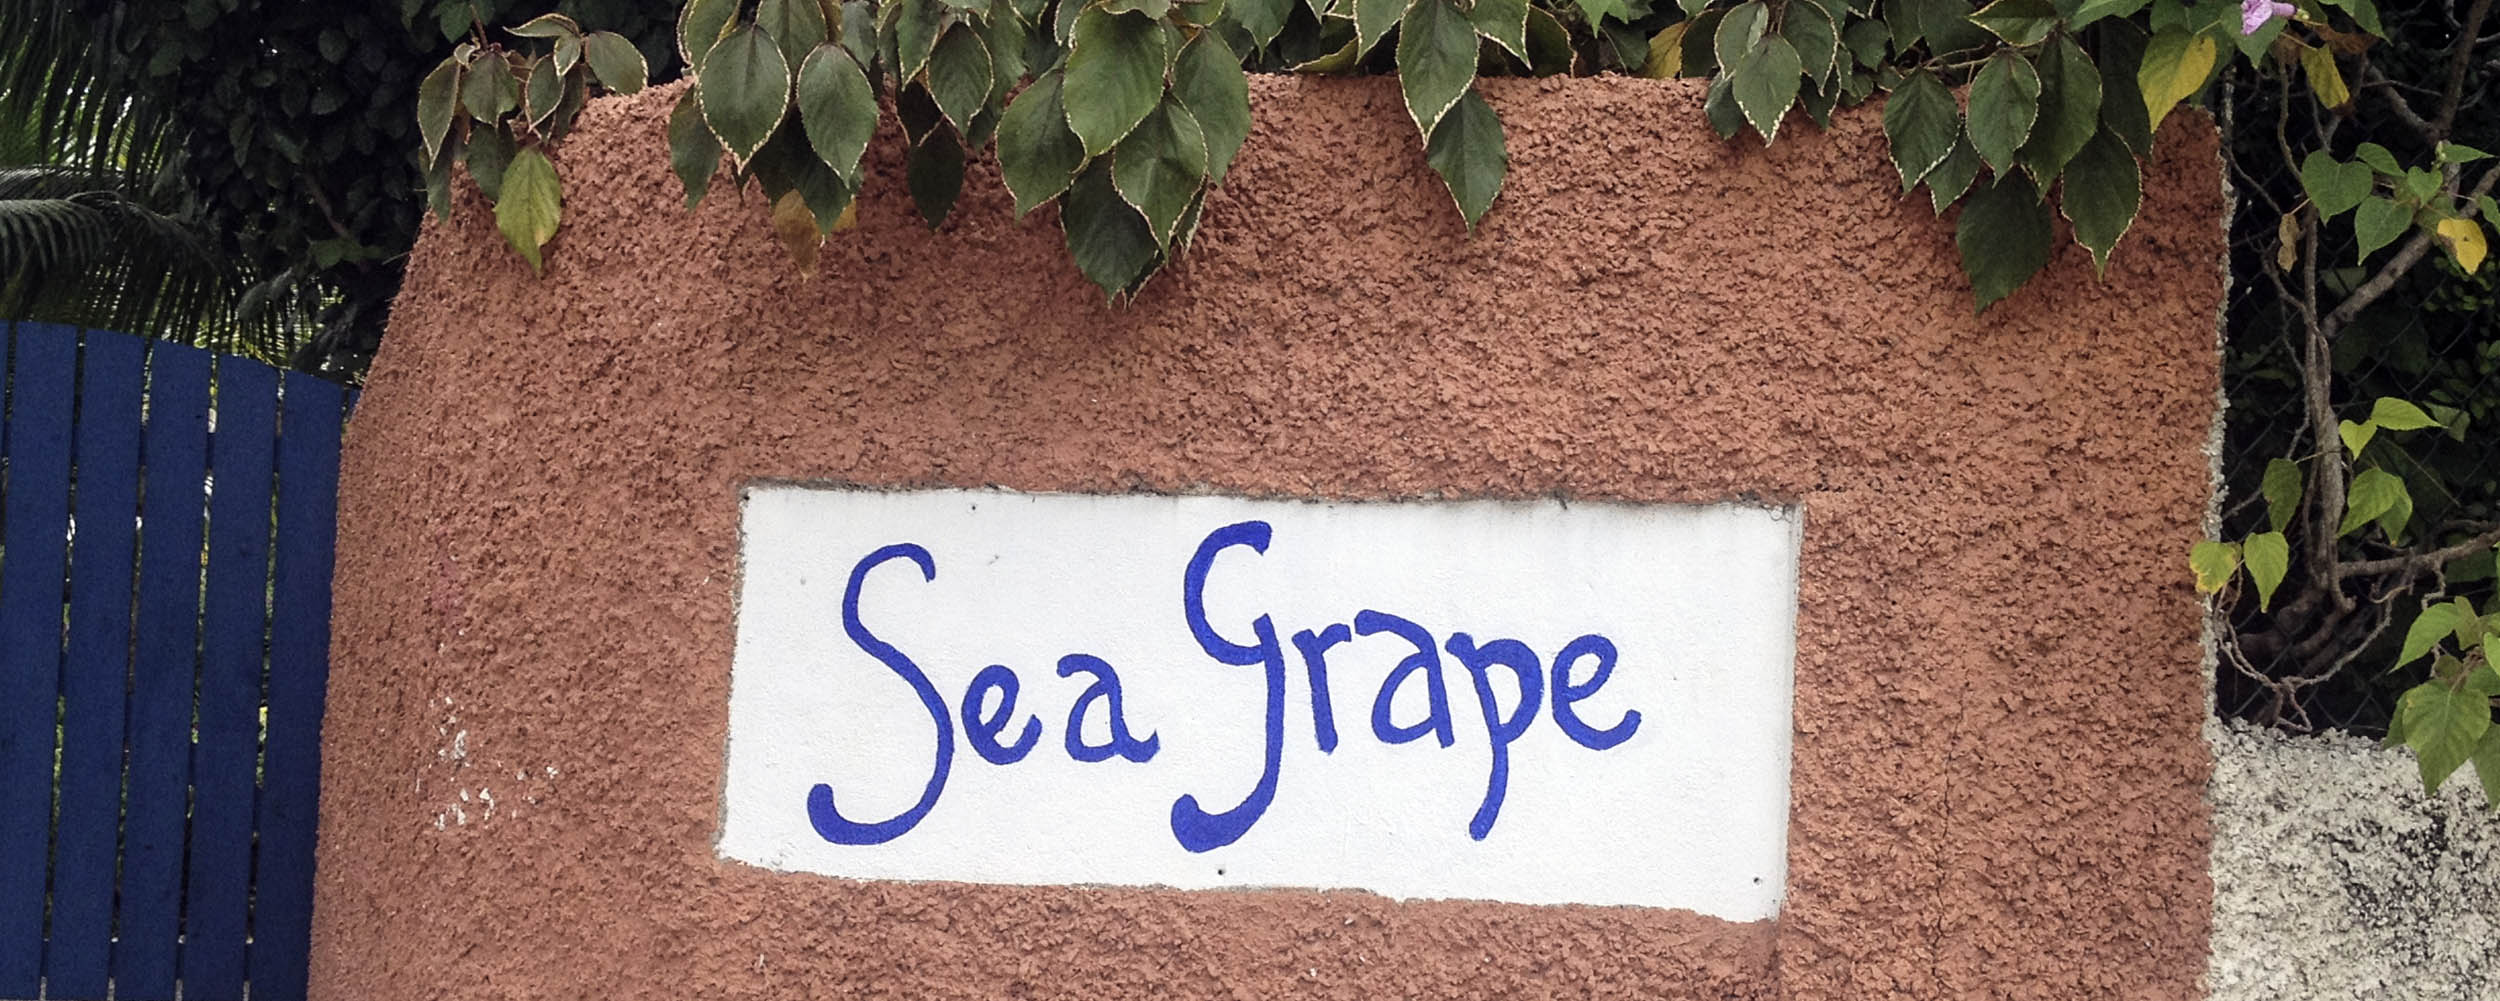 Sea Grape - Negril Jamaica